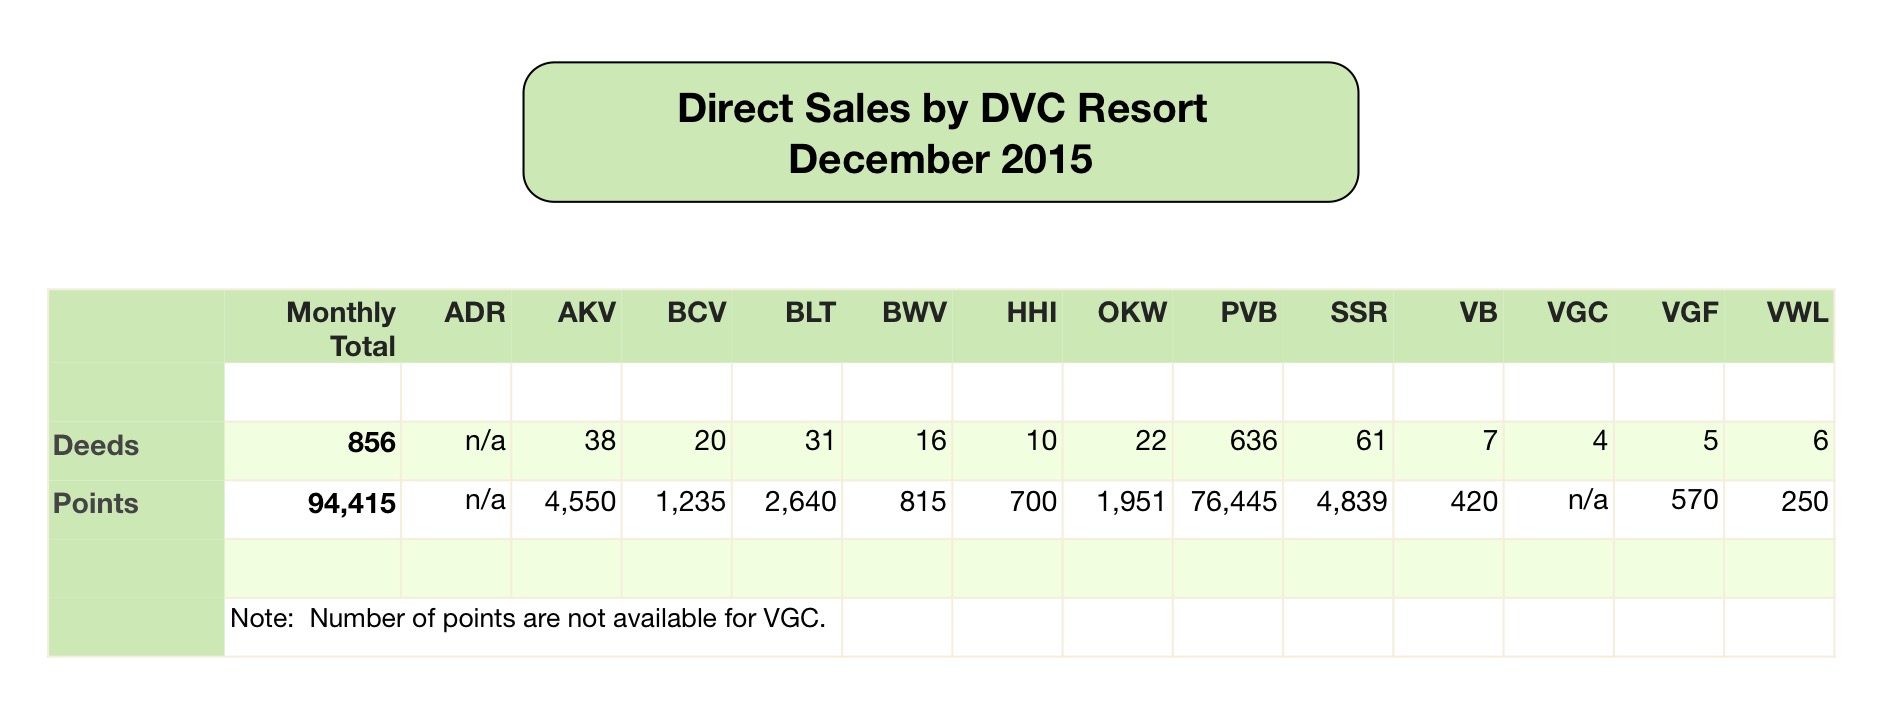 DVC Direct Sales - December 2015